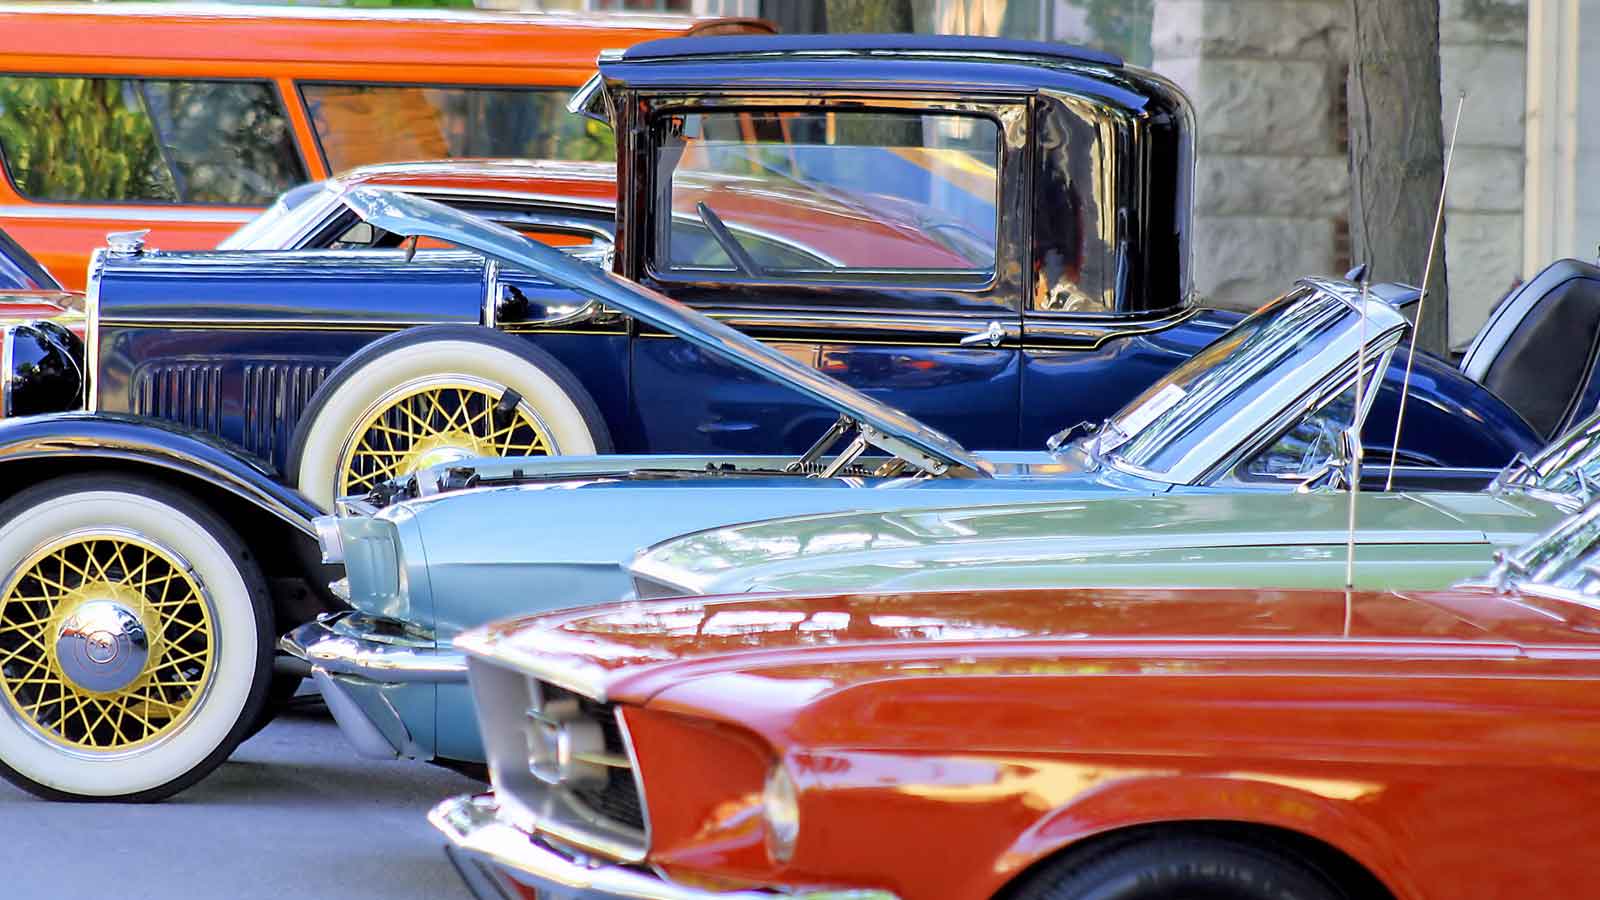 Row of vintage cars